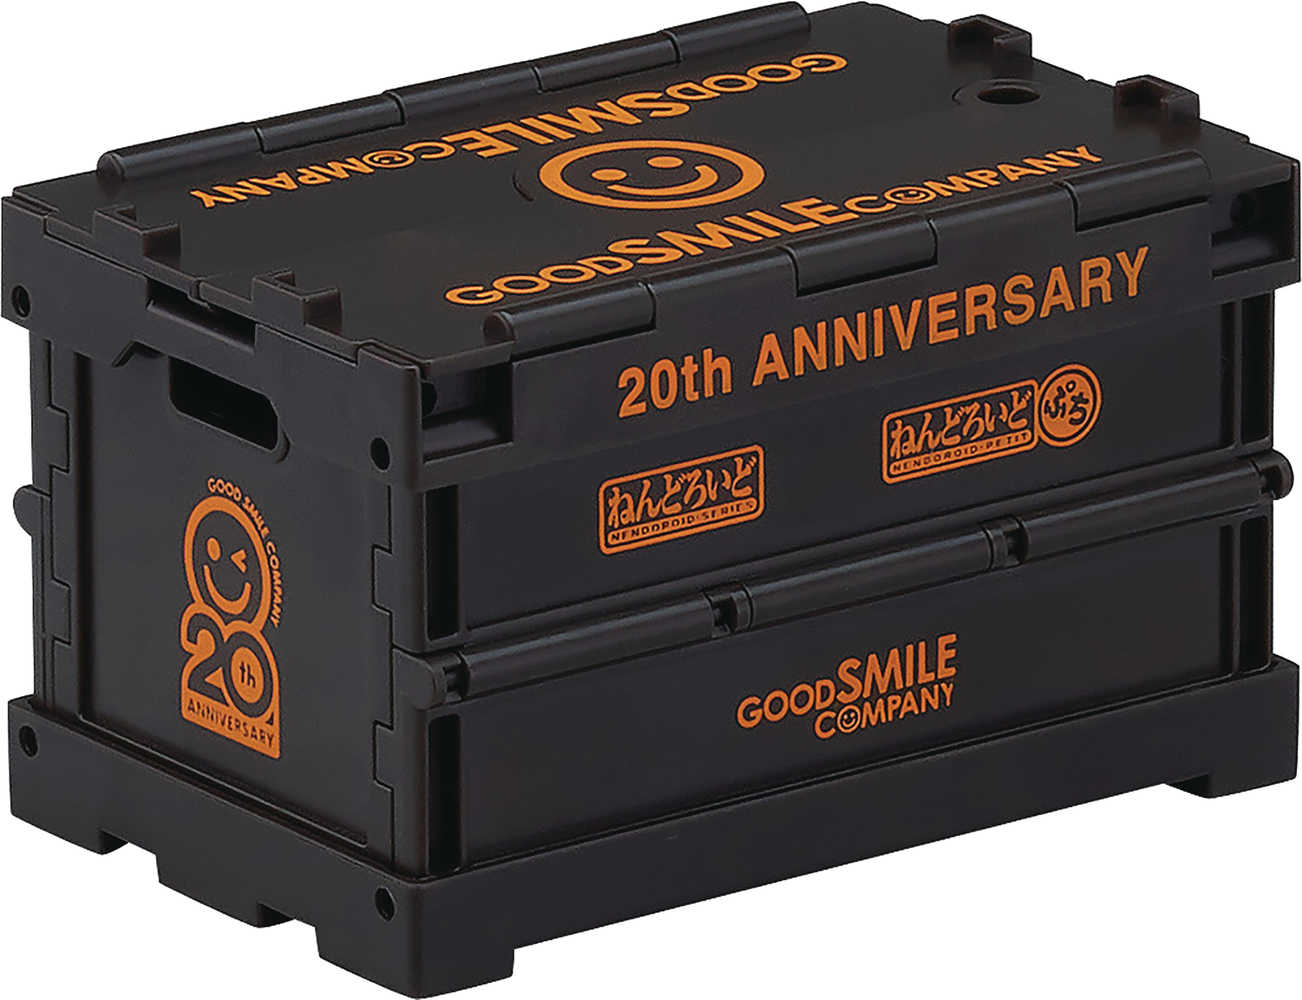 Nendoroid More Anniversary Container Black Ver